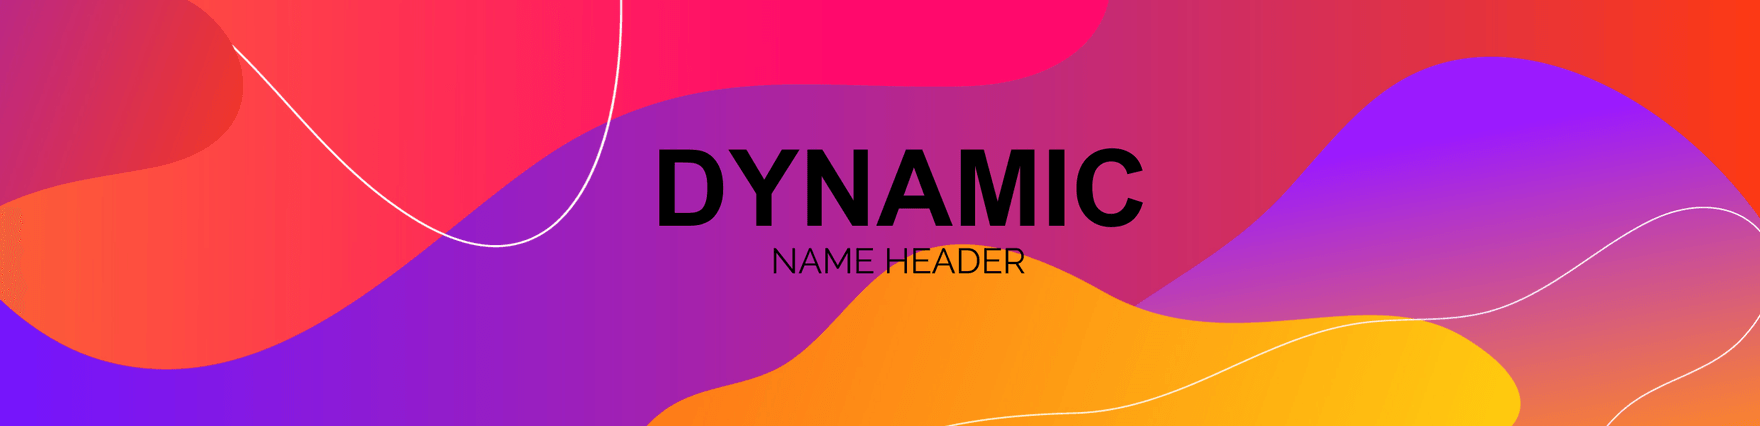 Dynamic Name Header